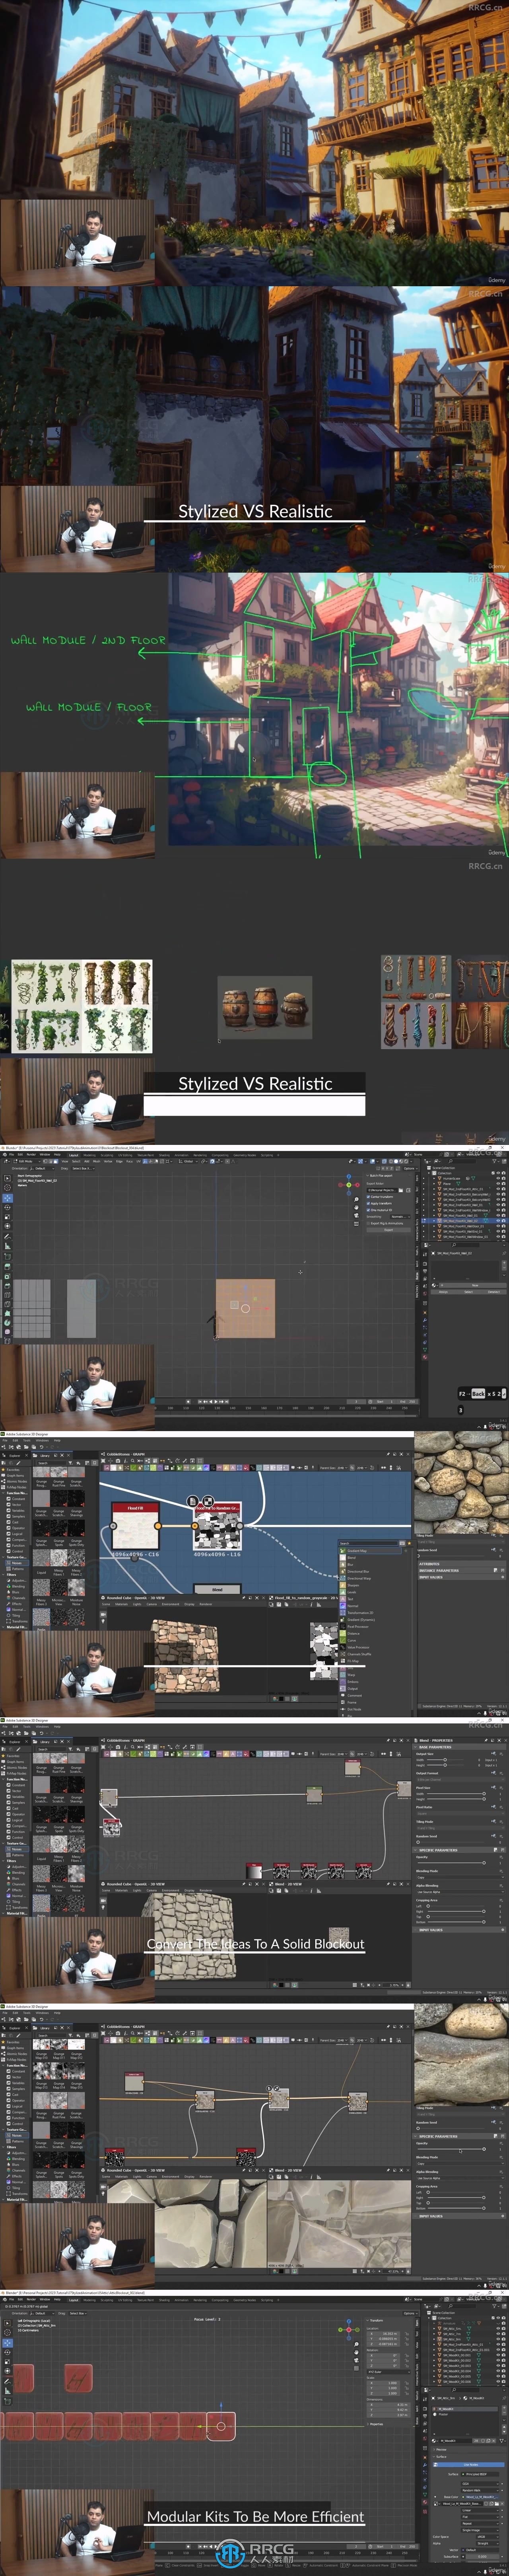 Blender与UE5影视游戏动画环境场景制作大师级视频教程